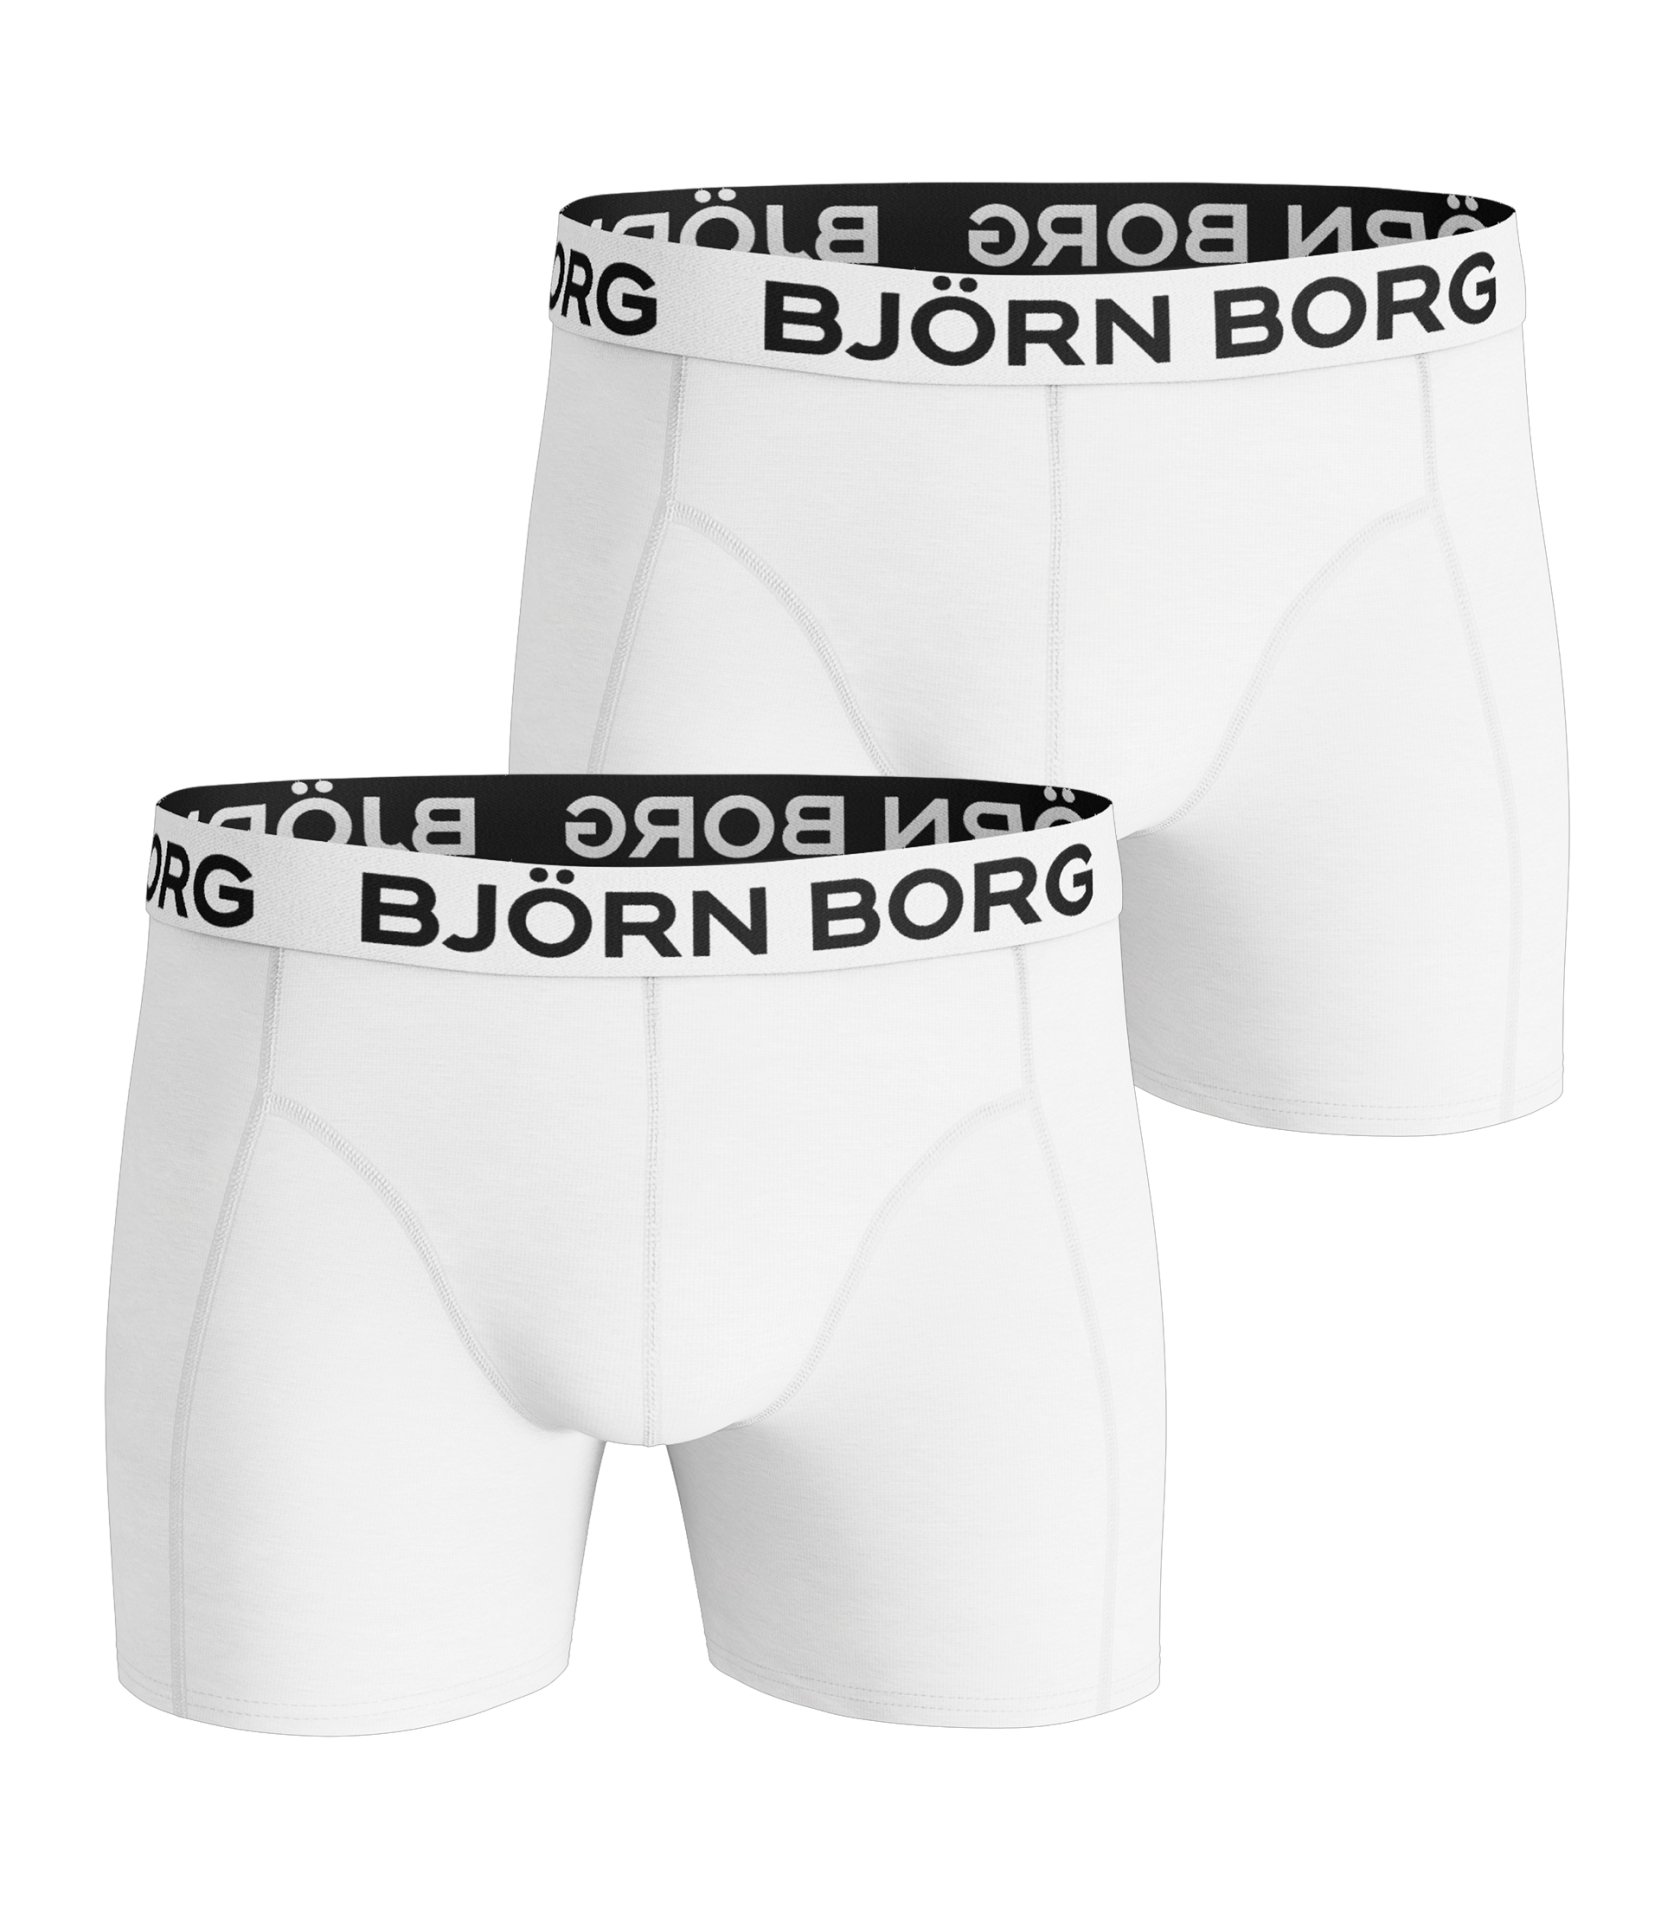 Bjorn Borg 2-pack NOS